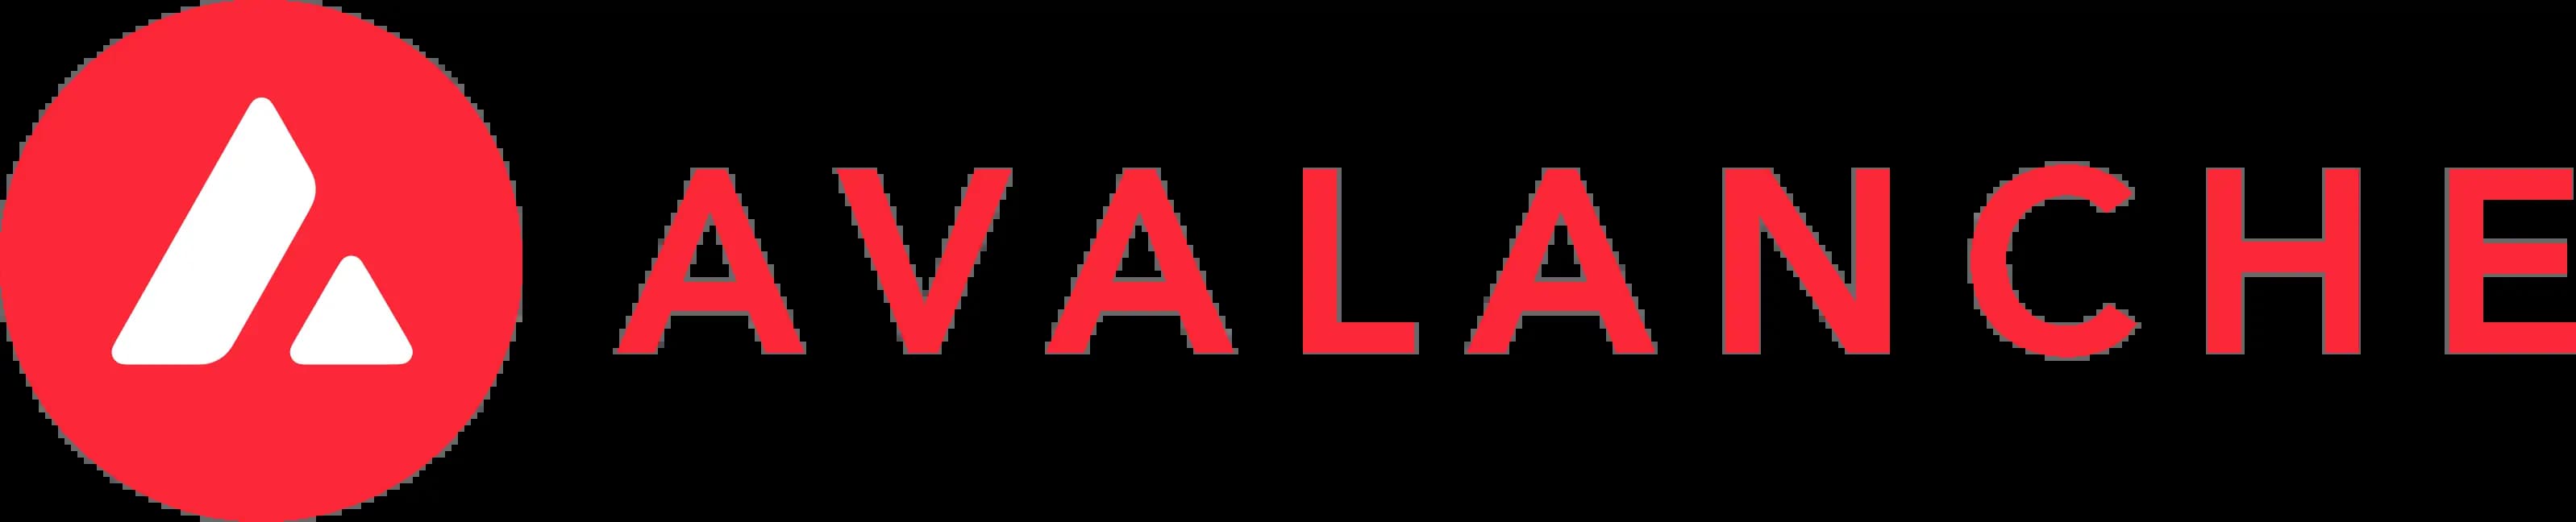 Avalance logo